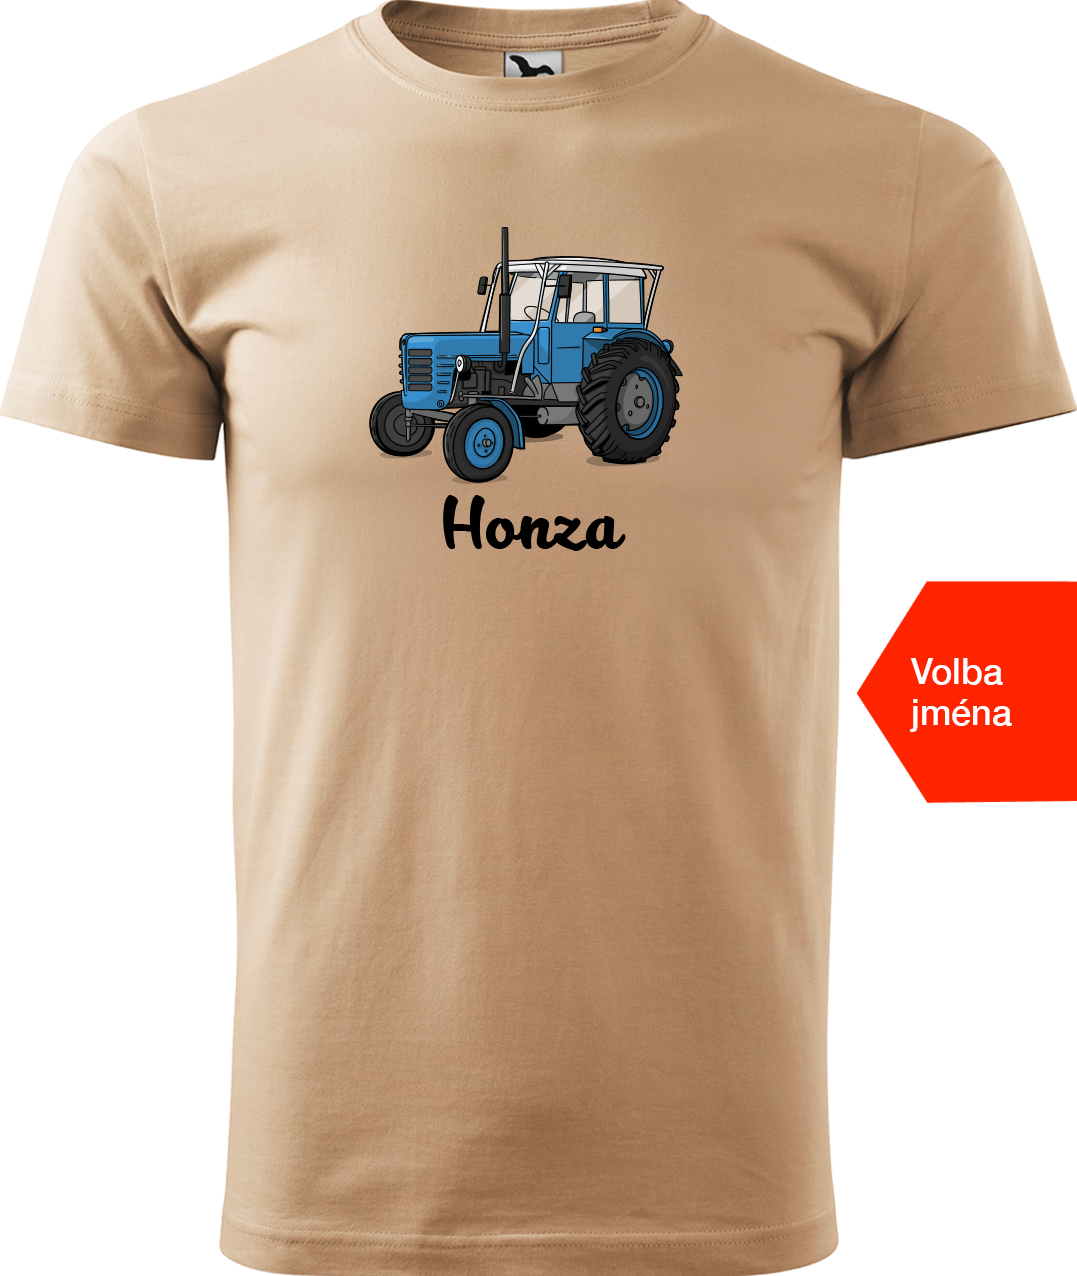 Tričko s traktorem a jménem - Starý traktor Velikost: XL, Barva: Písková (08)